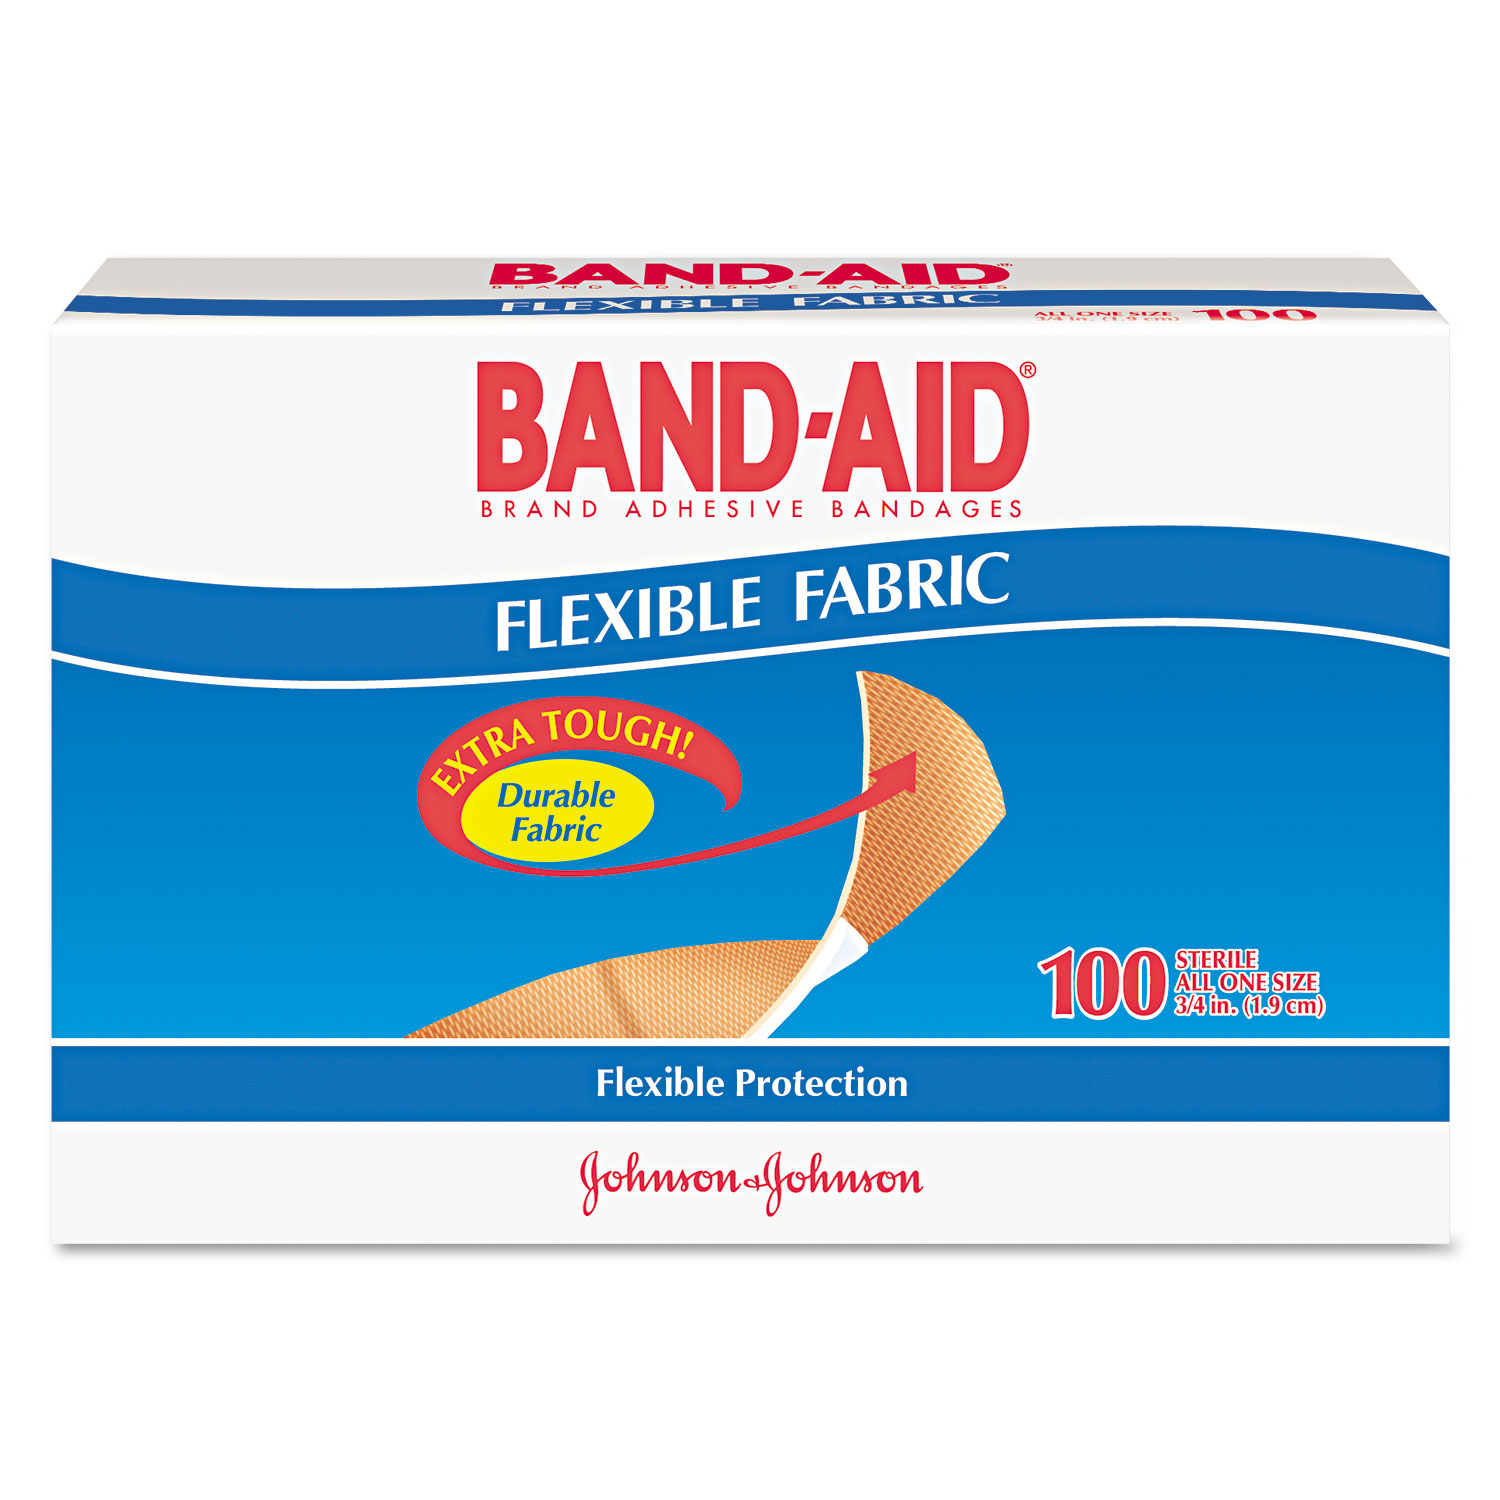 Flexible Fabric Premium Adhesive Bandages, 3/4 x 3, 100/Box